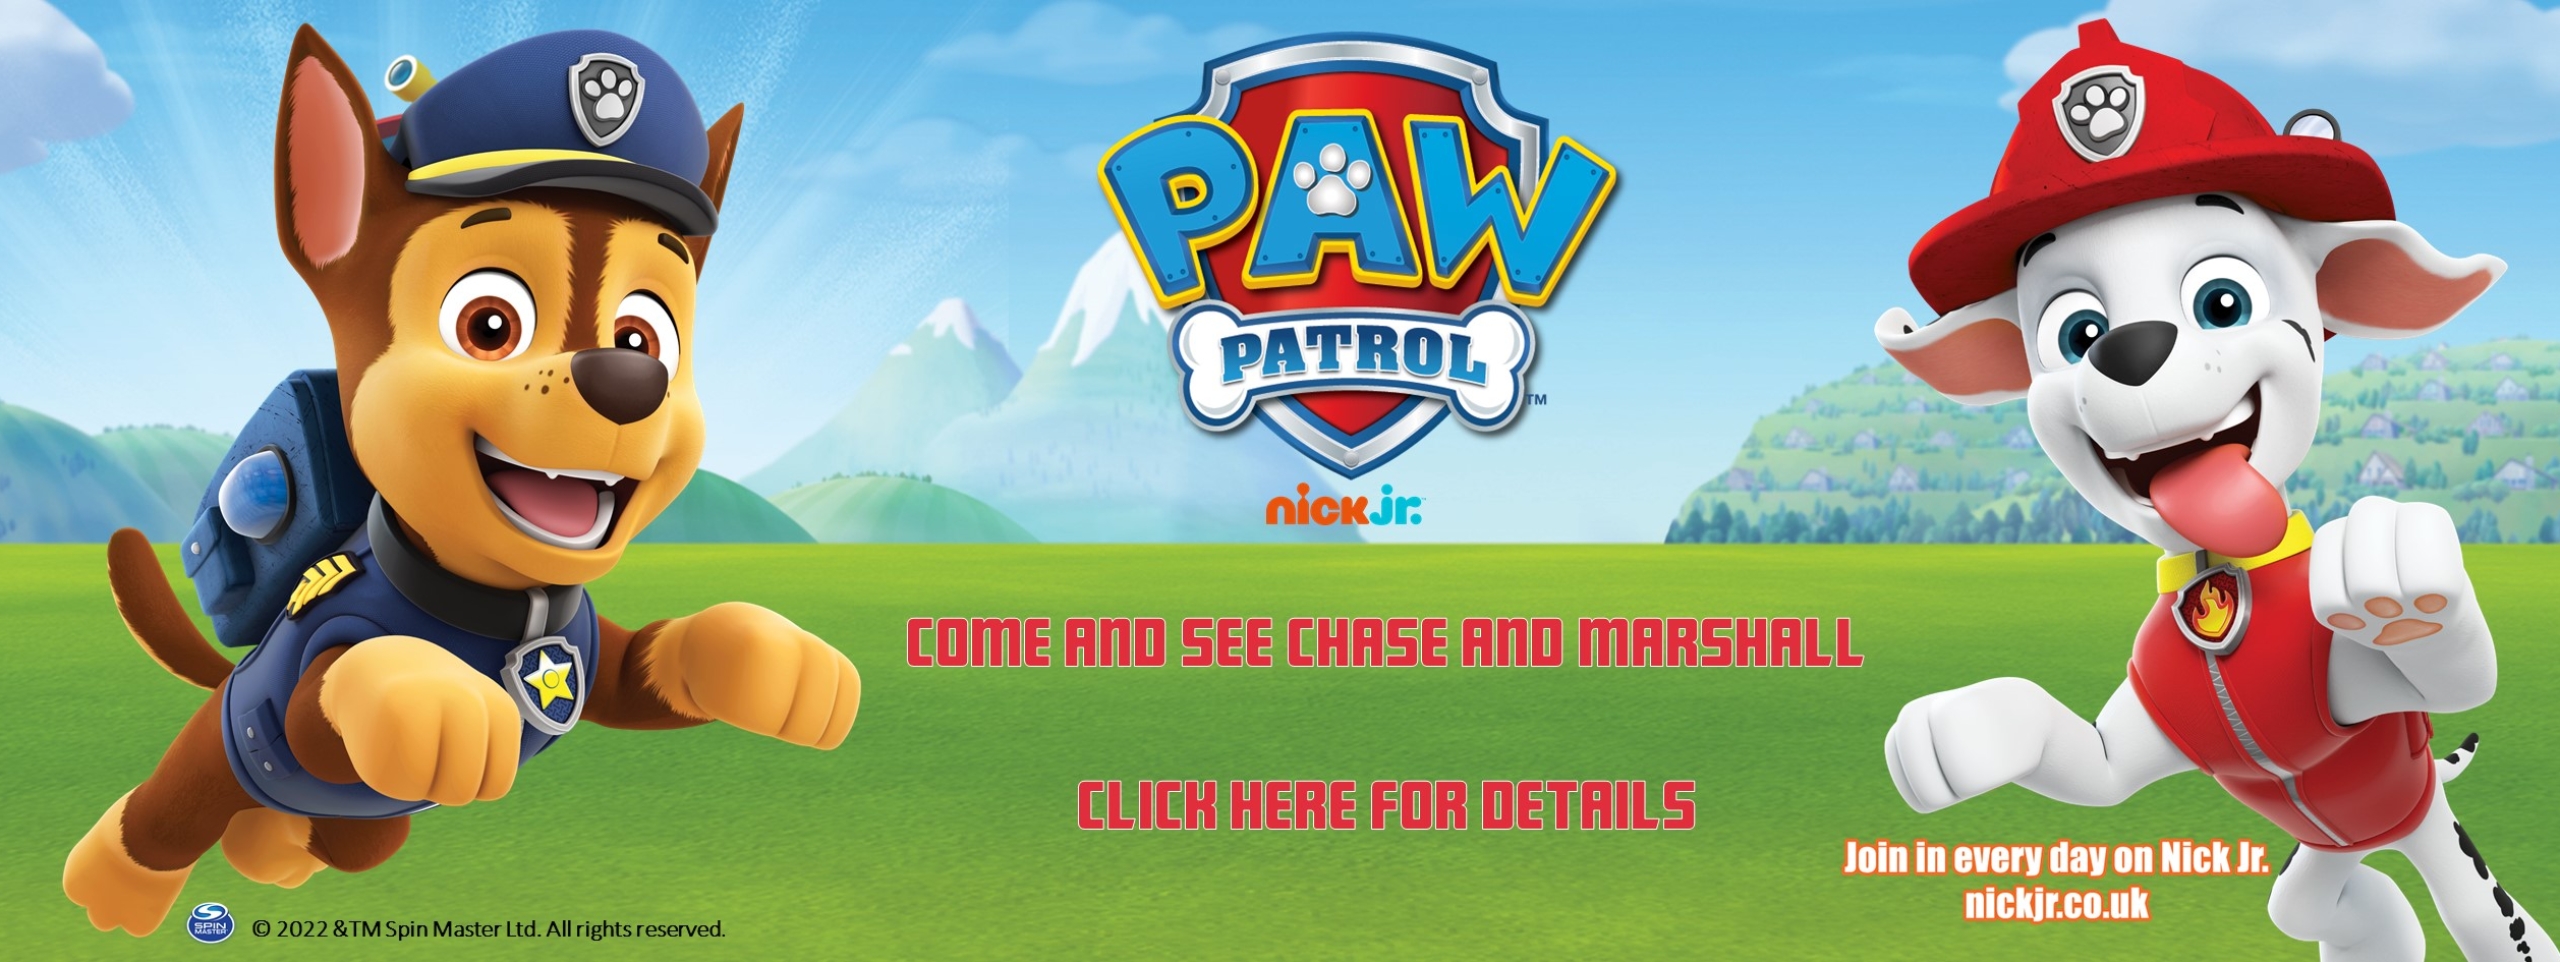 PAW Patrol Web Banner V4